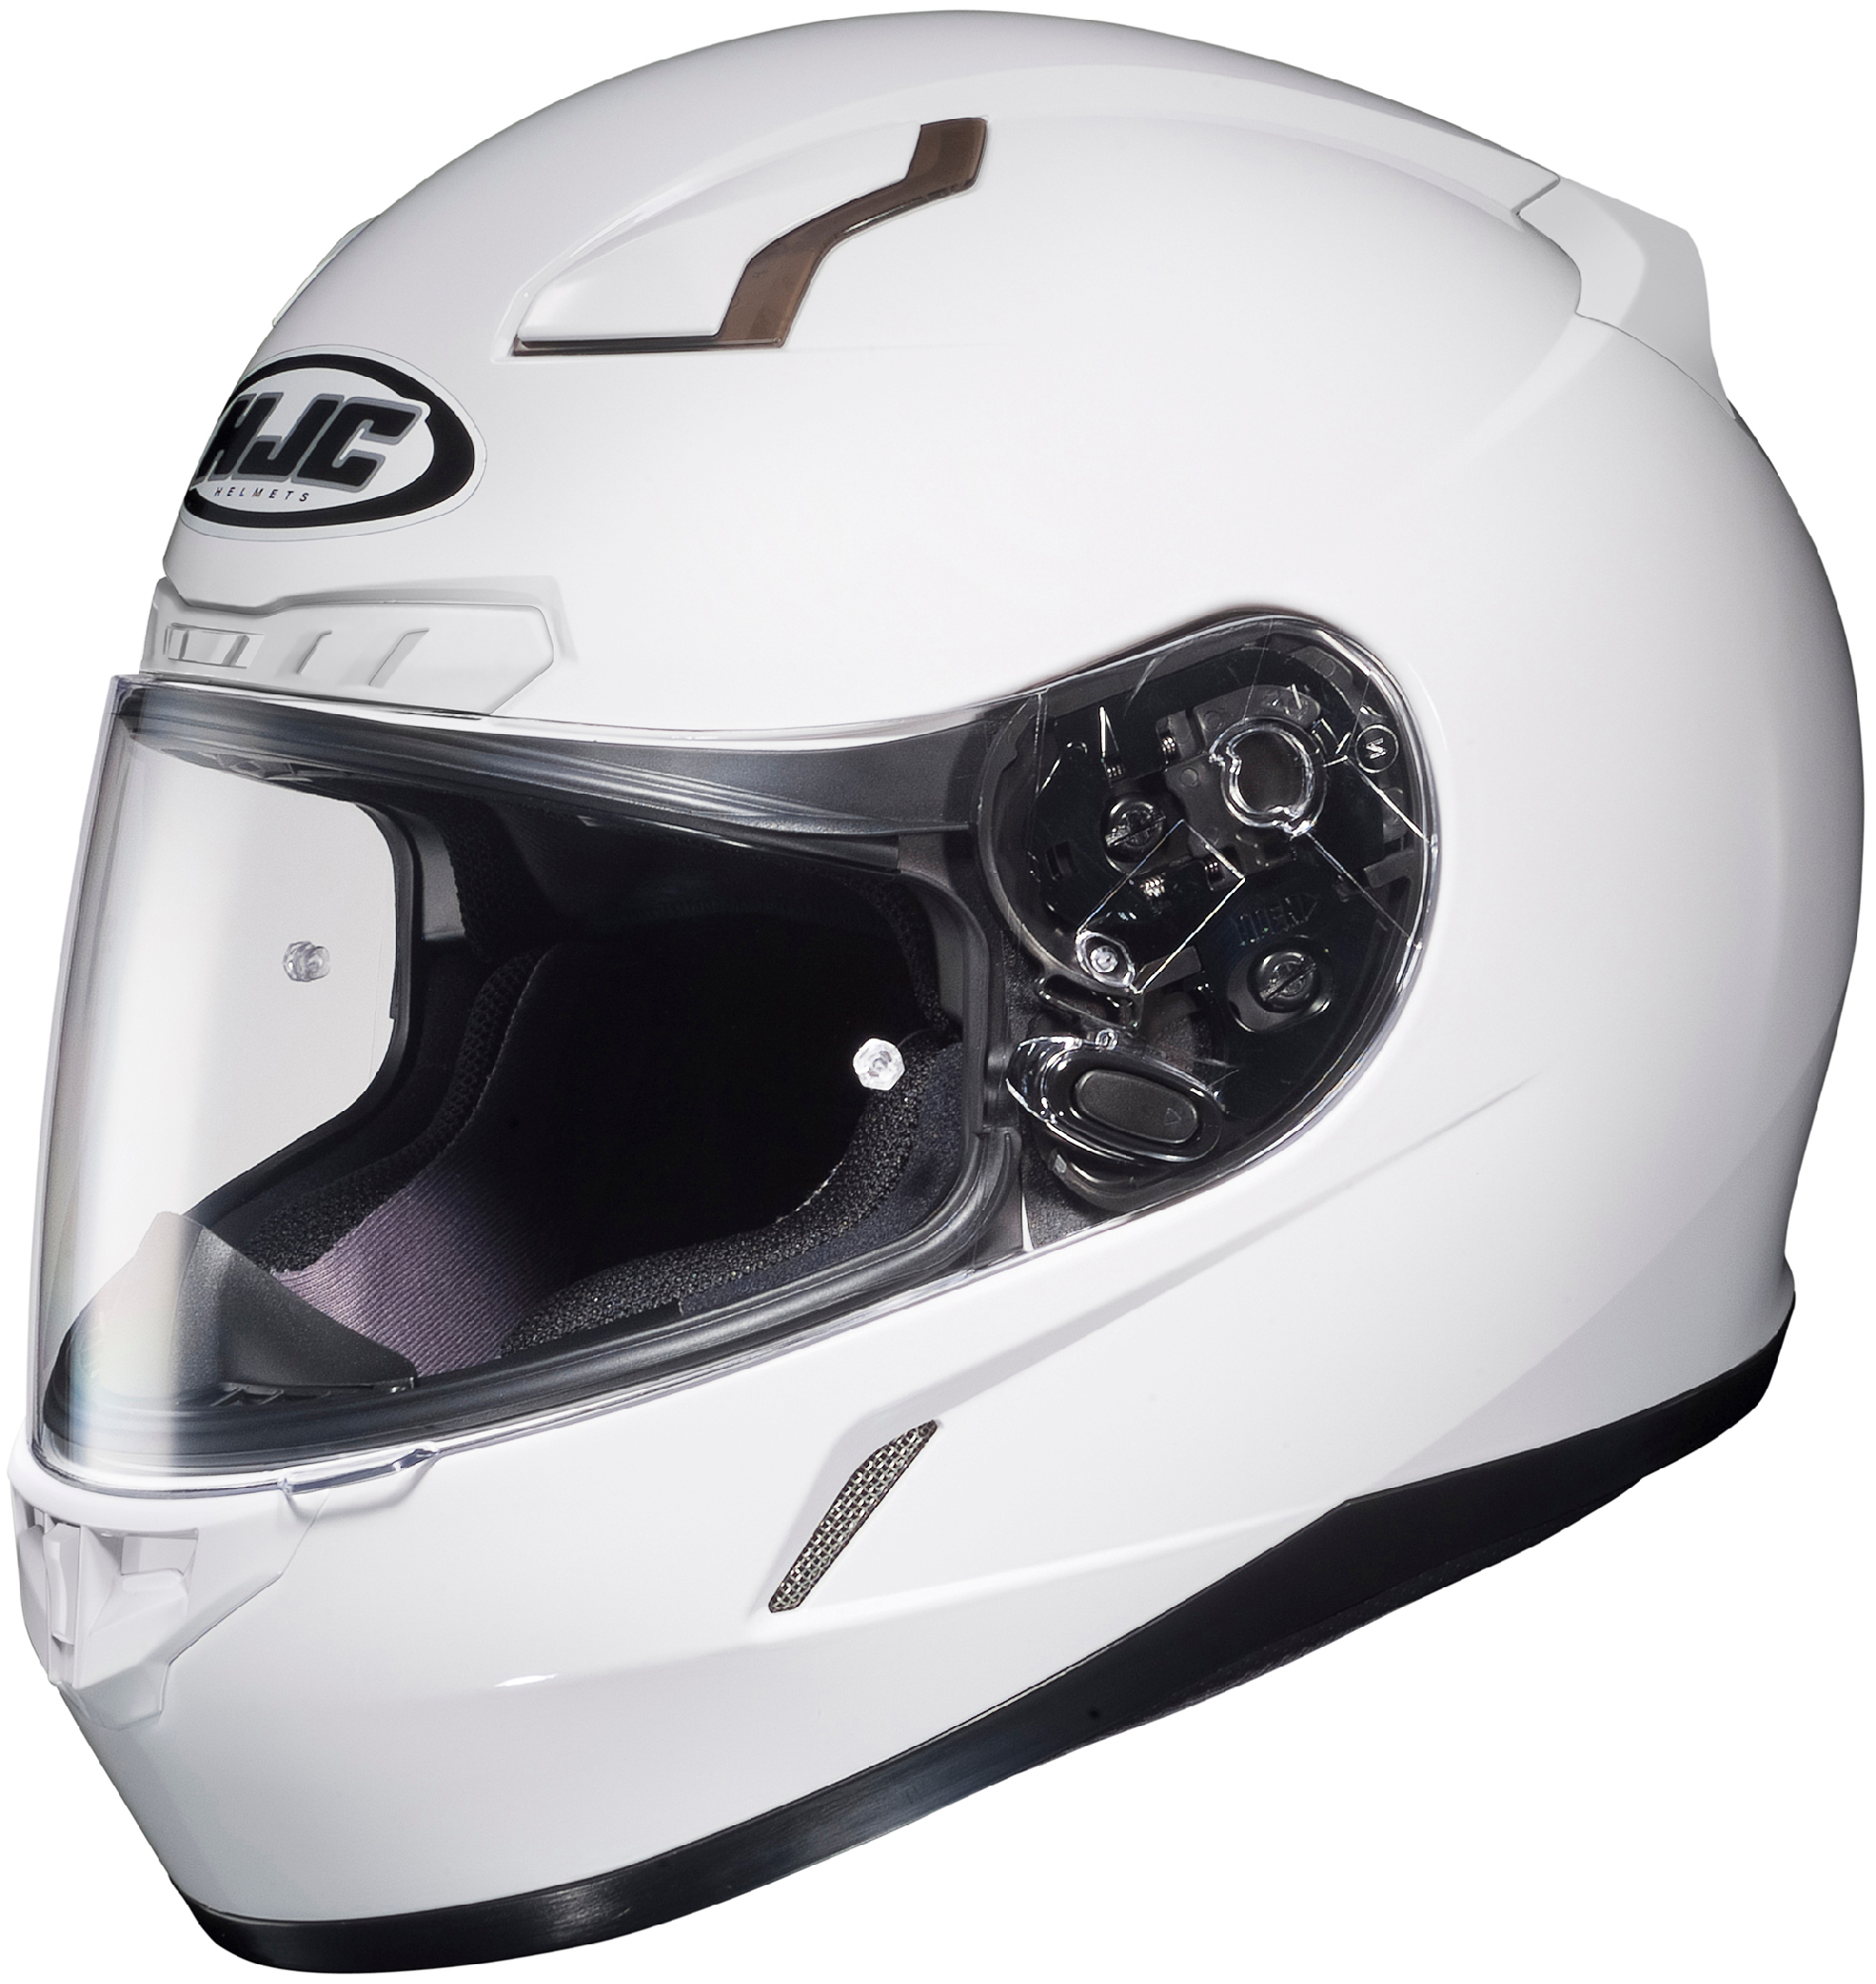 HJC Adult White CL-17 Motorcycle Helmet | eBay